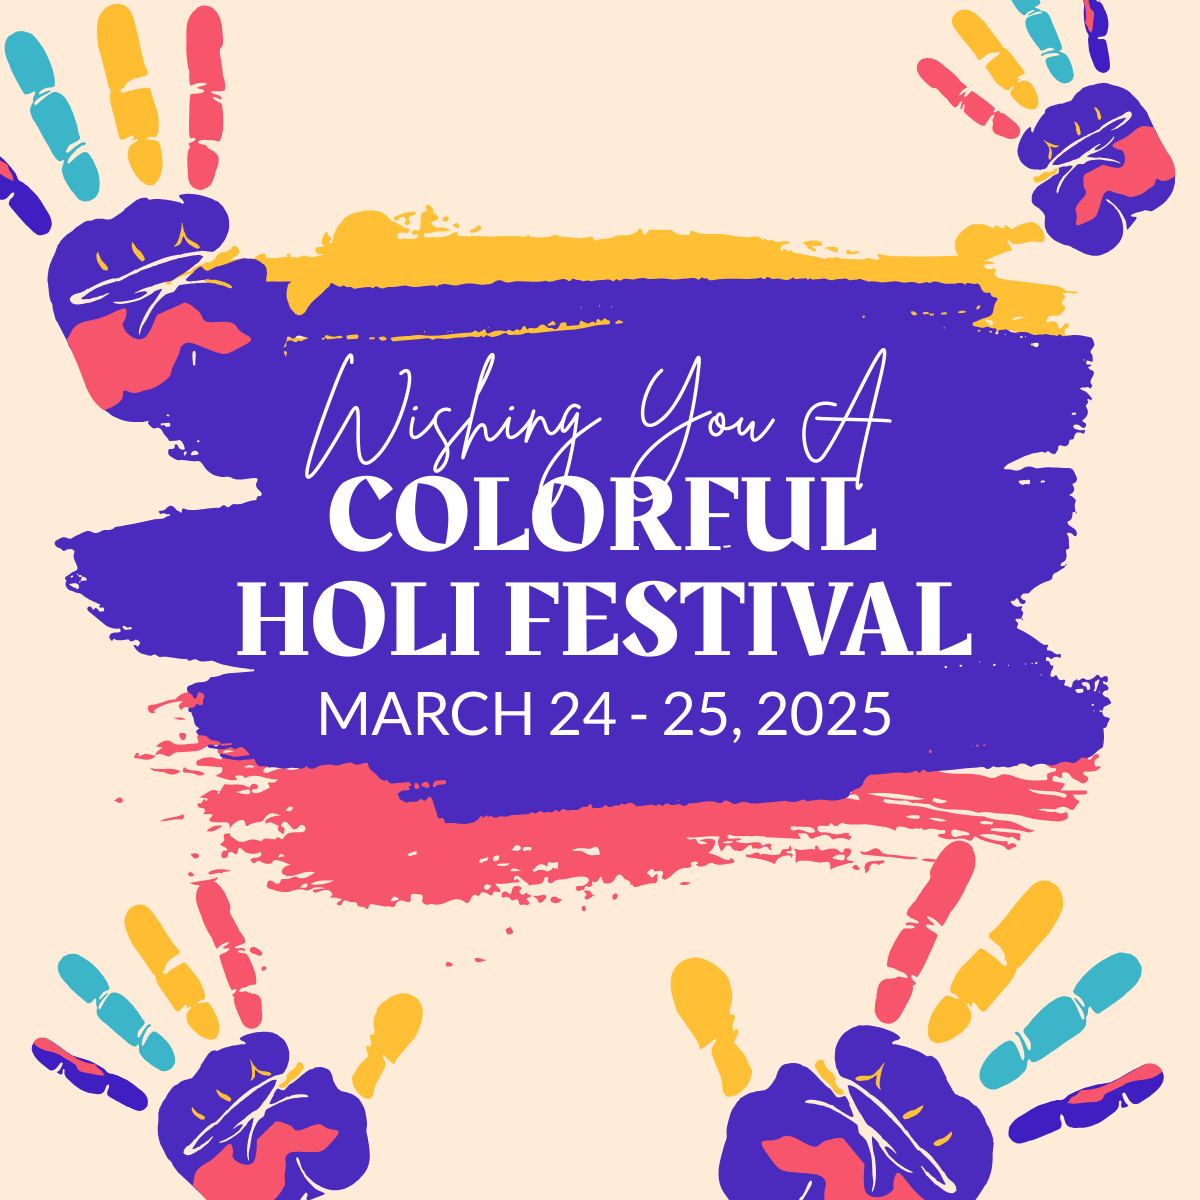 Colorful Holi Festival Linkedin Post